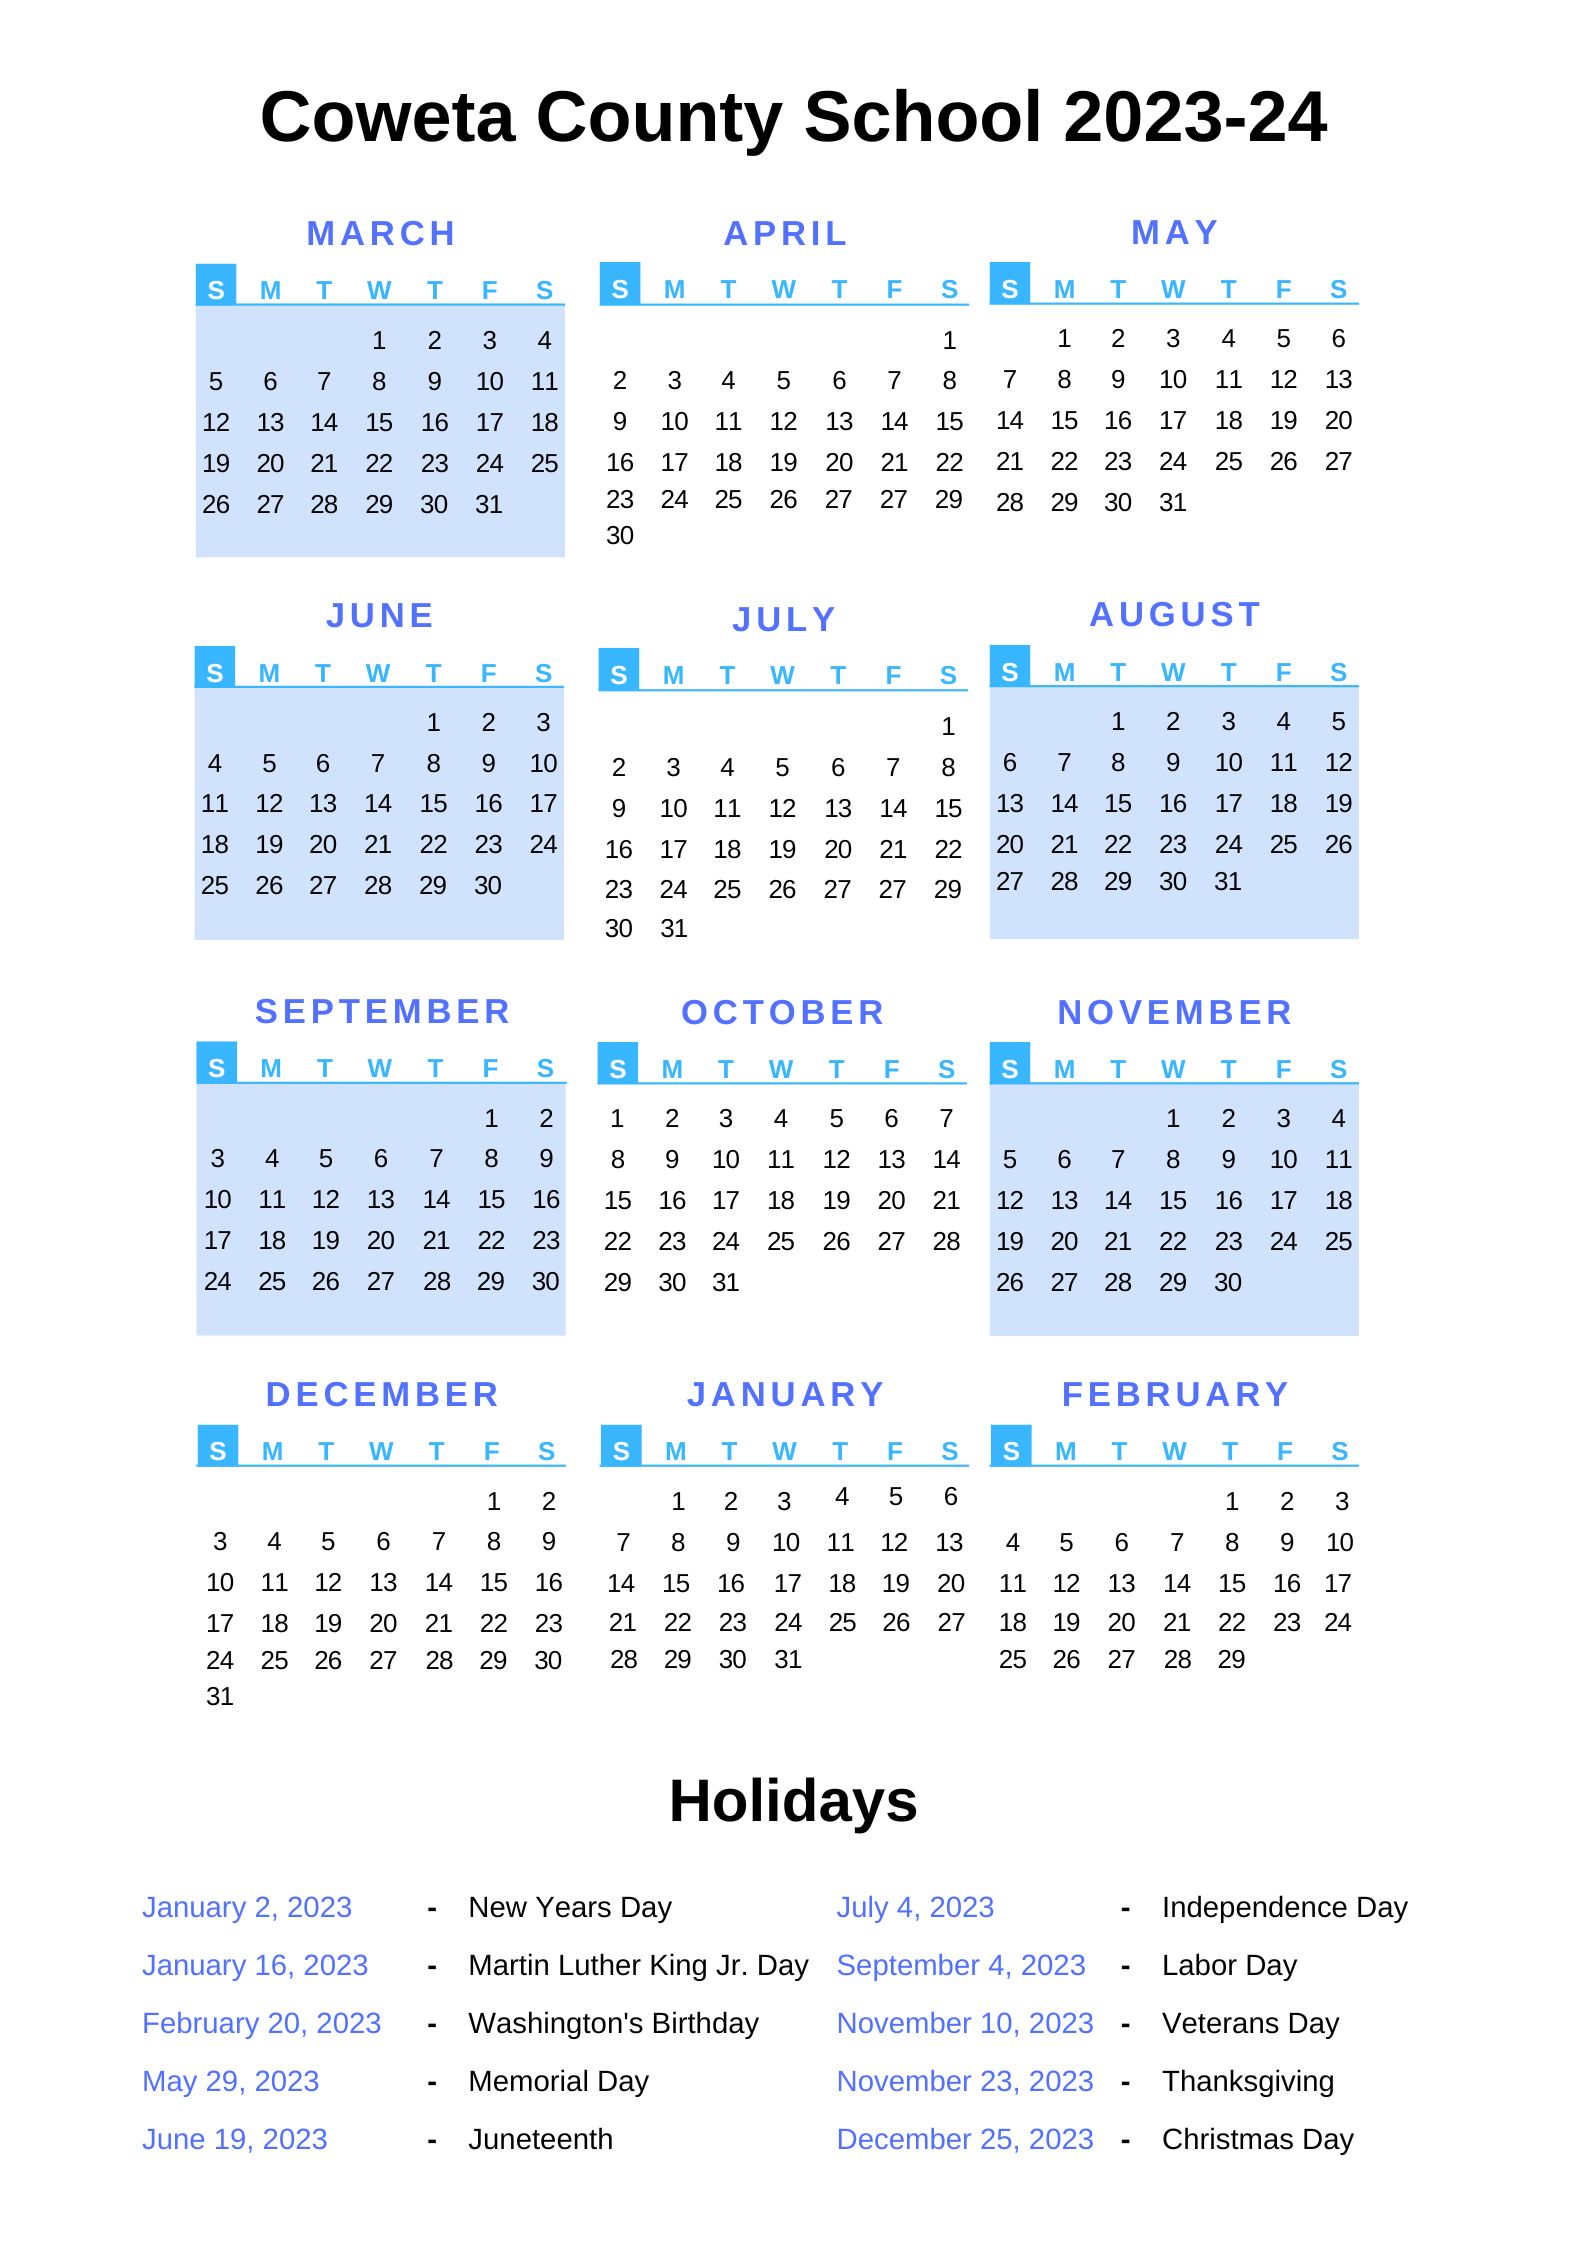 Coweta County Schools Calendar 2023 24 With Holidays